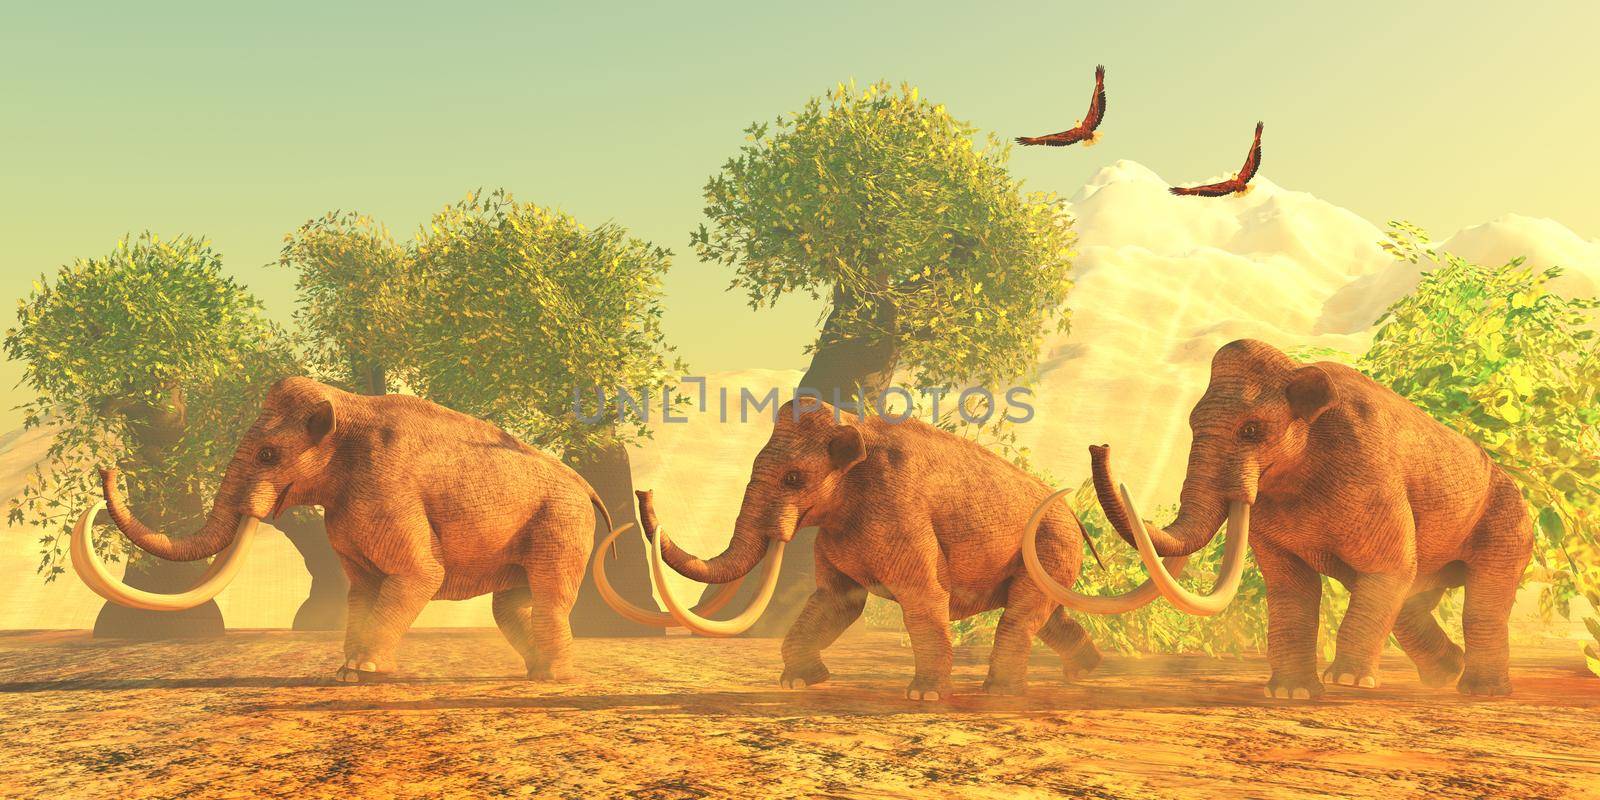 A Columbian Mammoth herd walks among trees in the Pleistocene Period of North America.